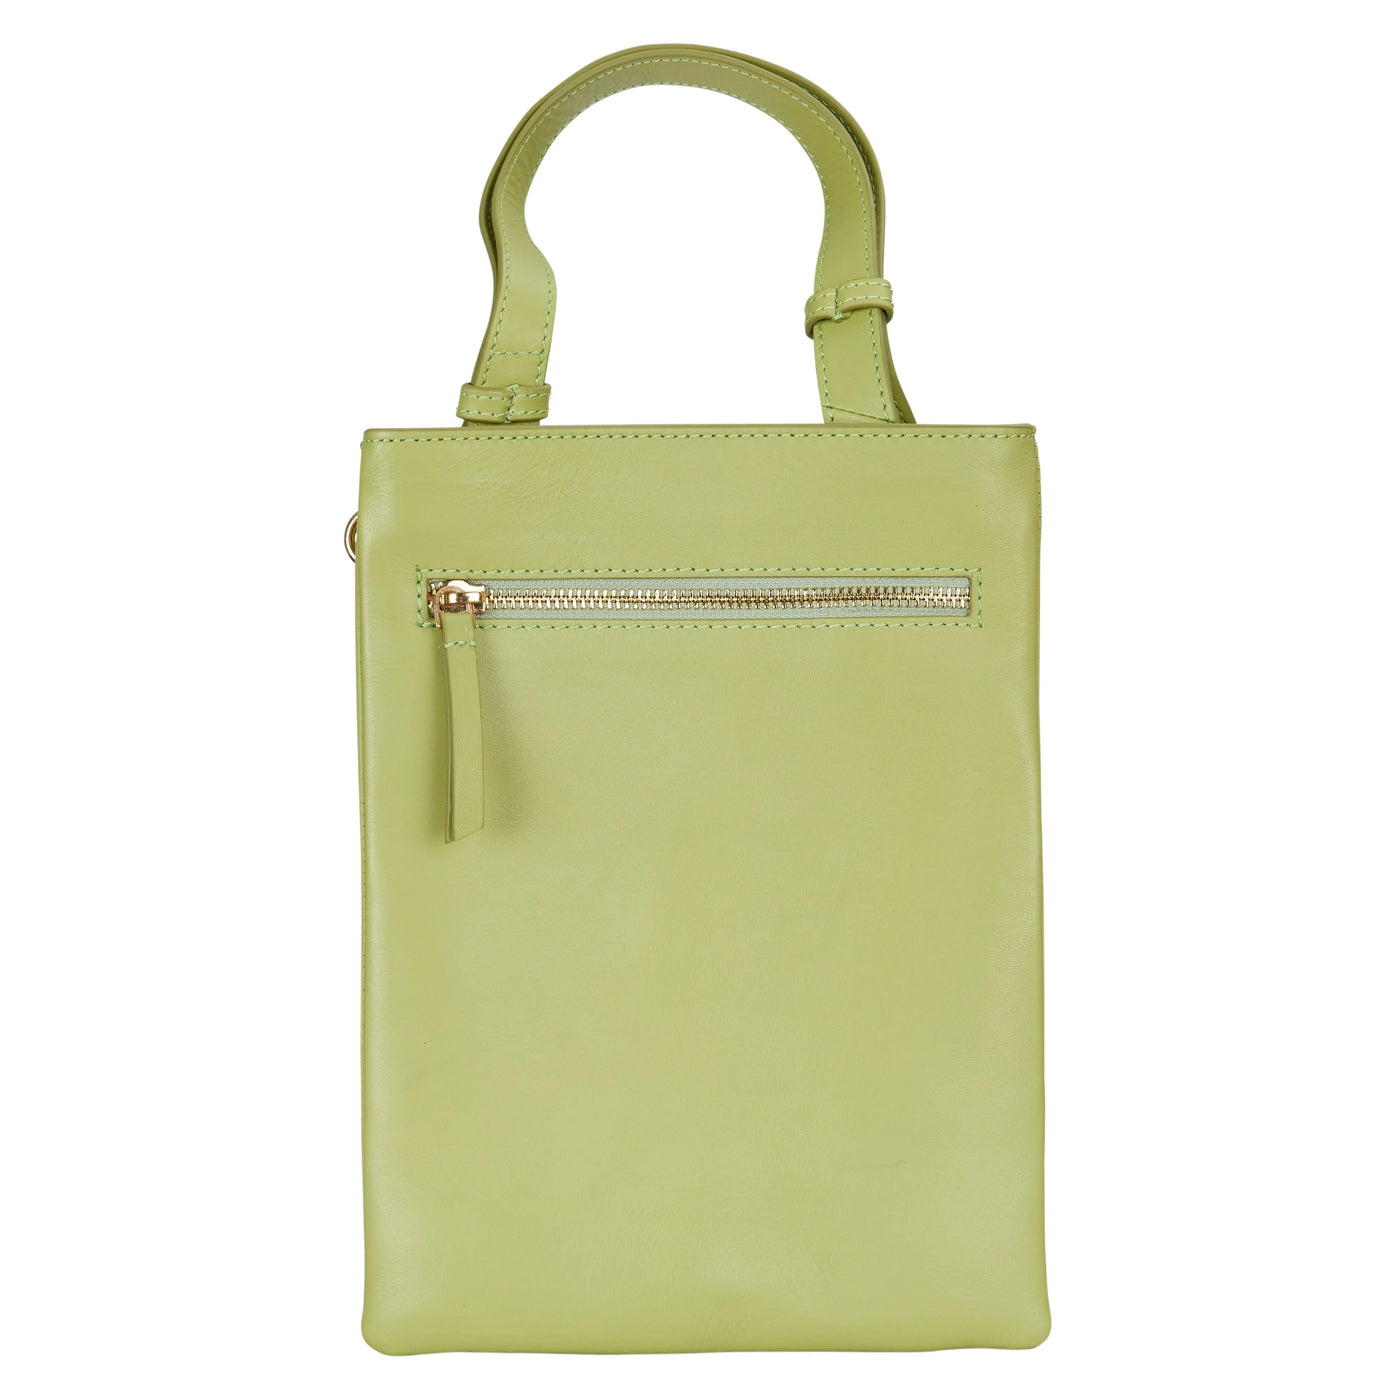 Twin Crossbody and Handbag in trendy lime green